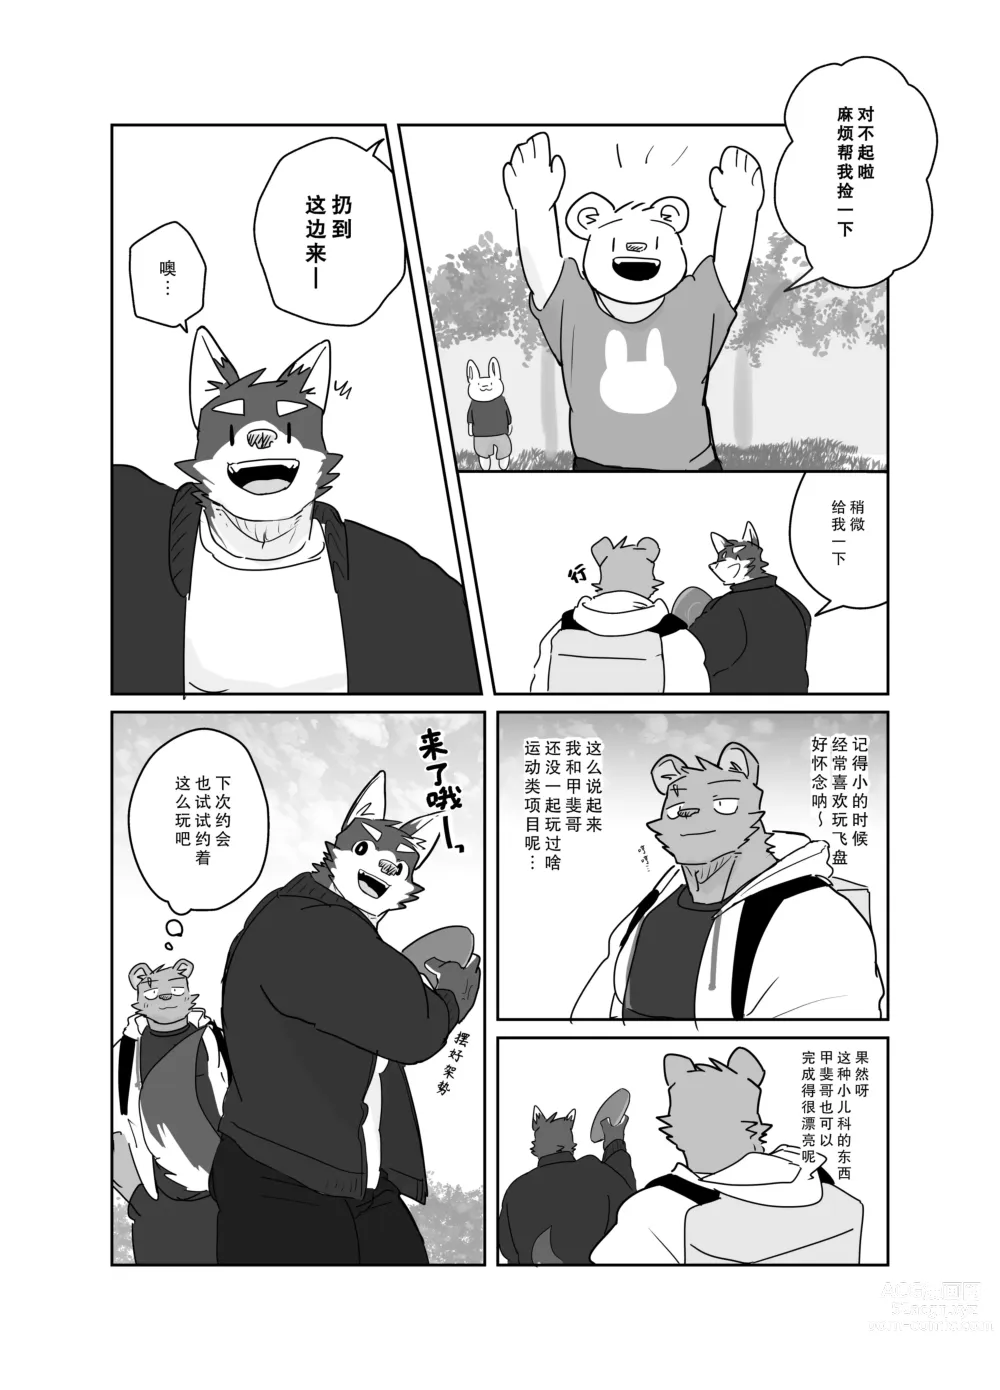 Page 2 of manga 飞盘